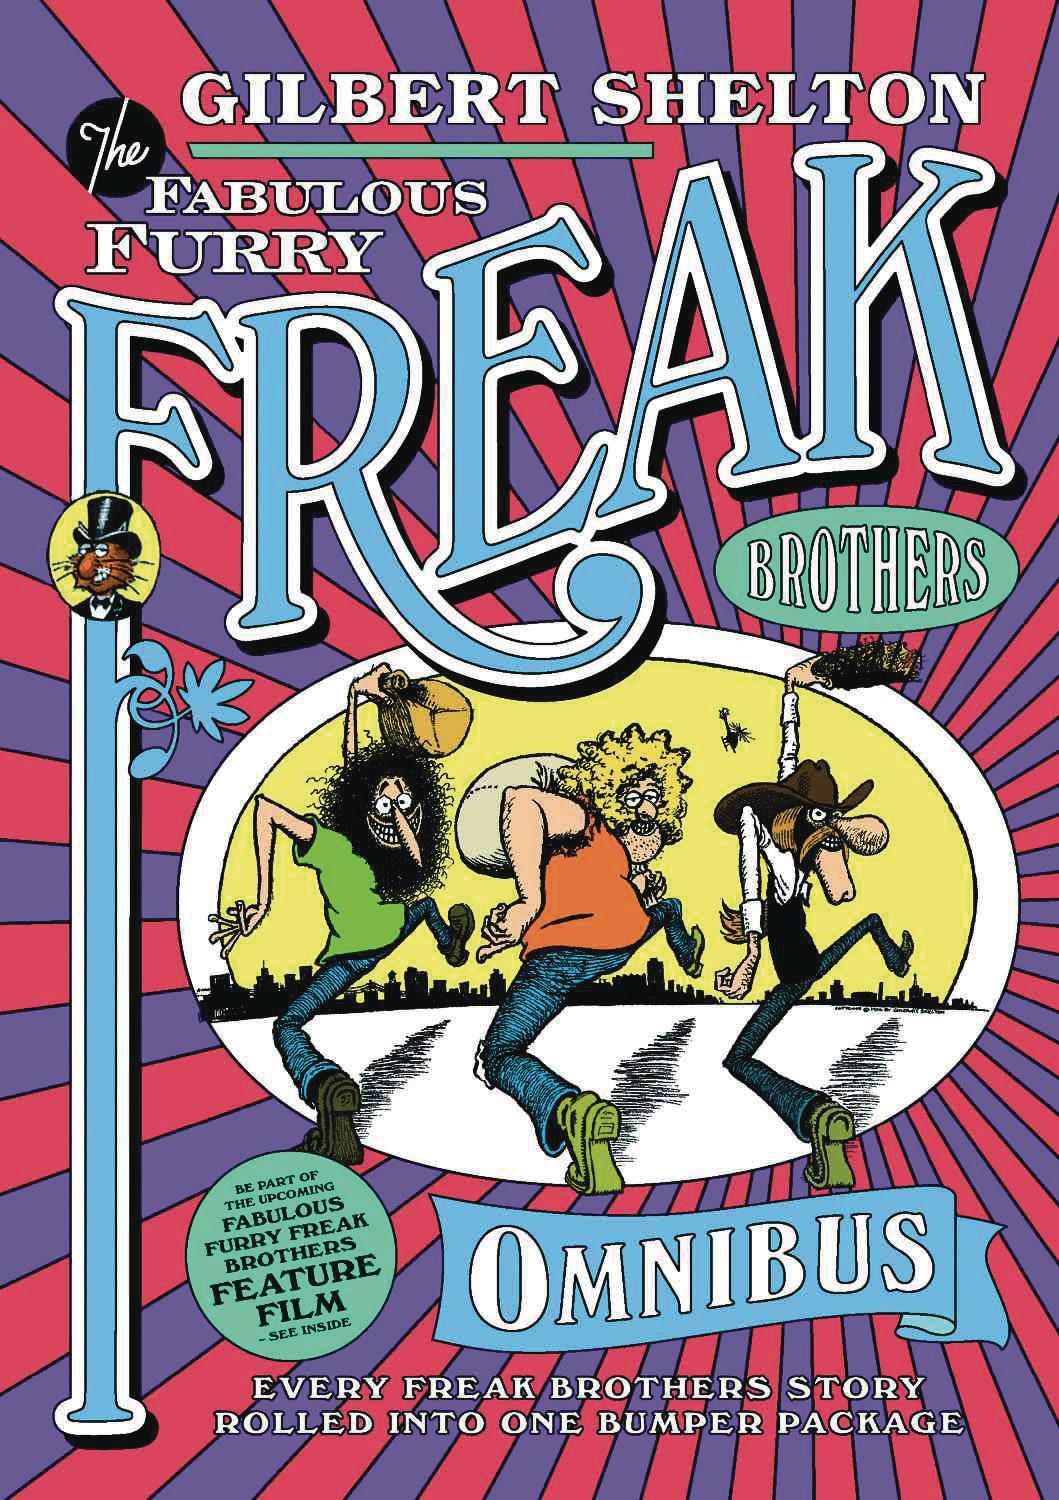 Fabulous Furry Freak Bros Compendium Graphic Novel